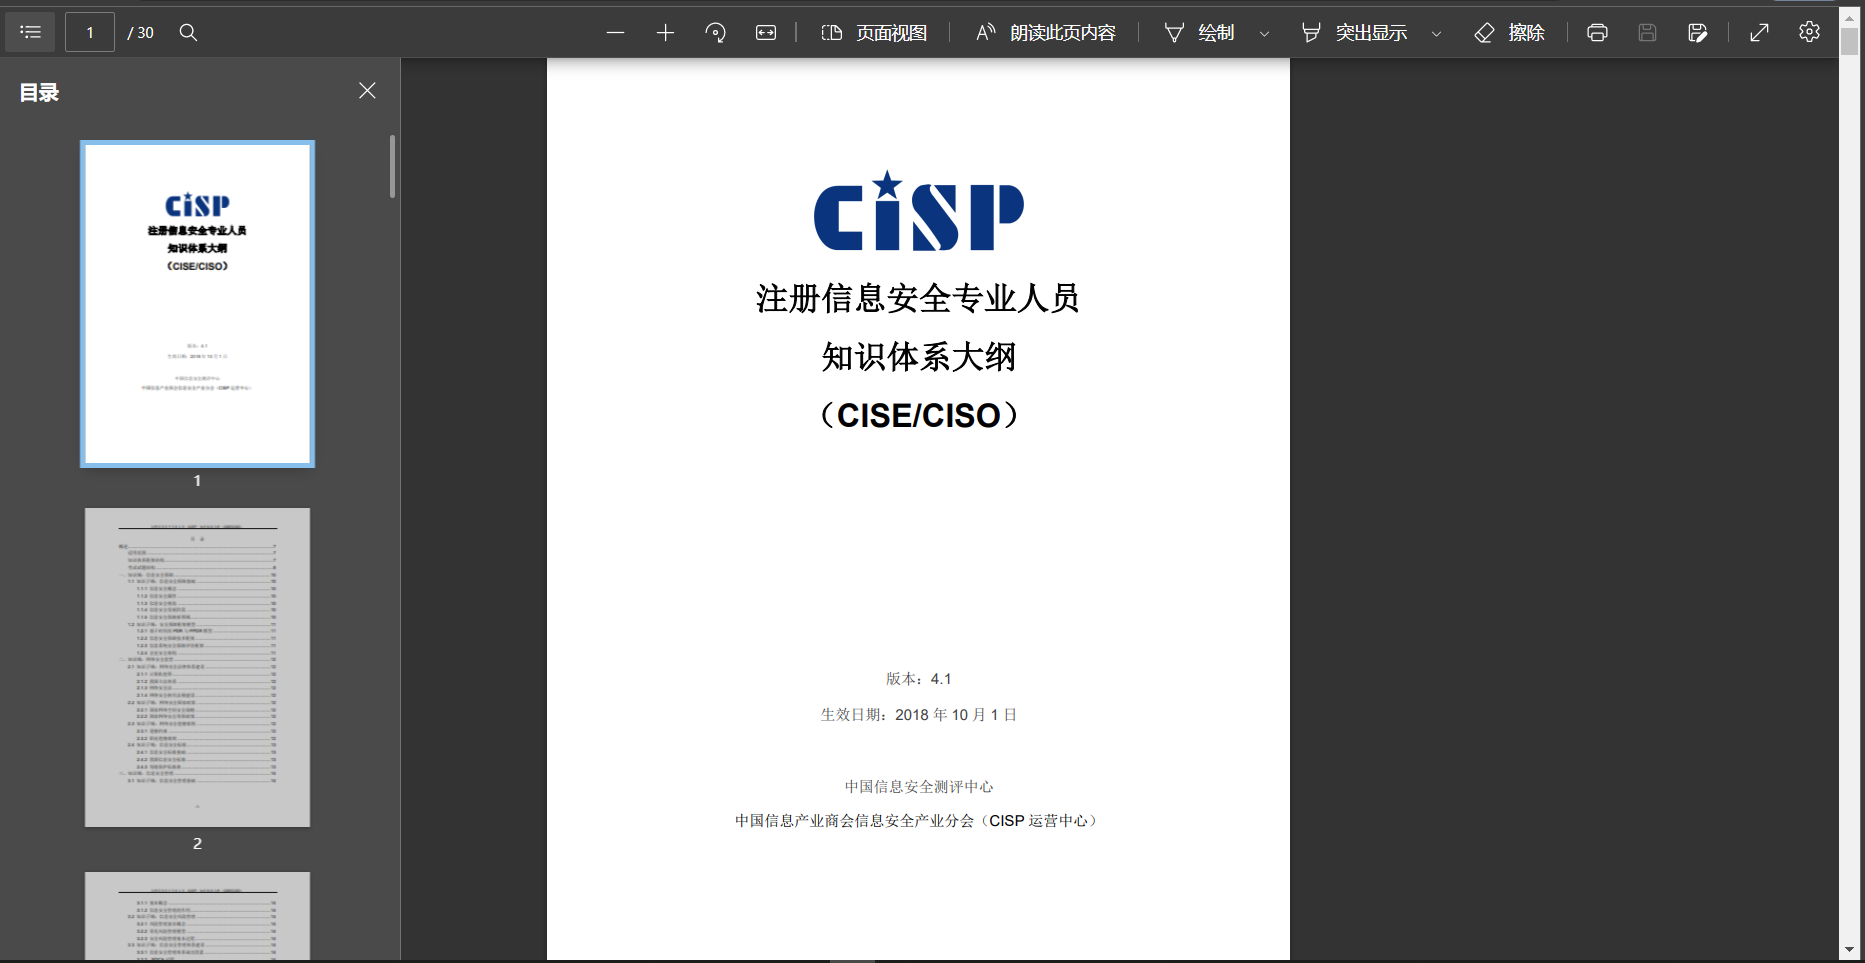 CISP知识体系大纲(CISE&CISO)2018